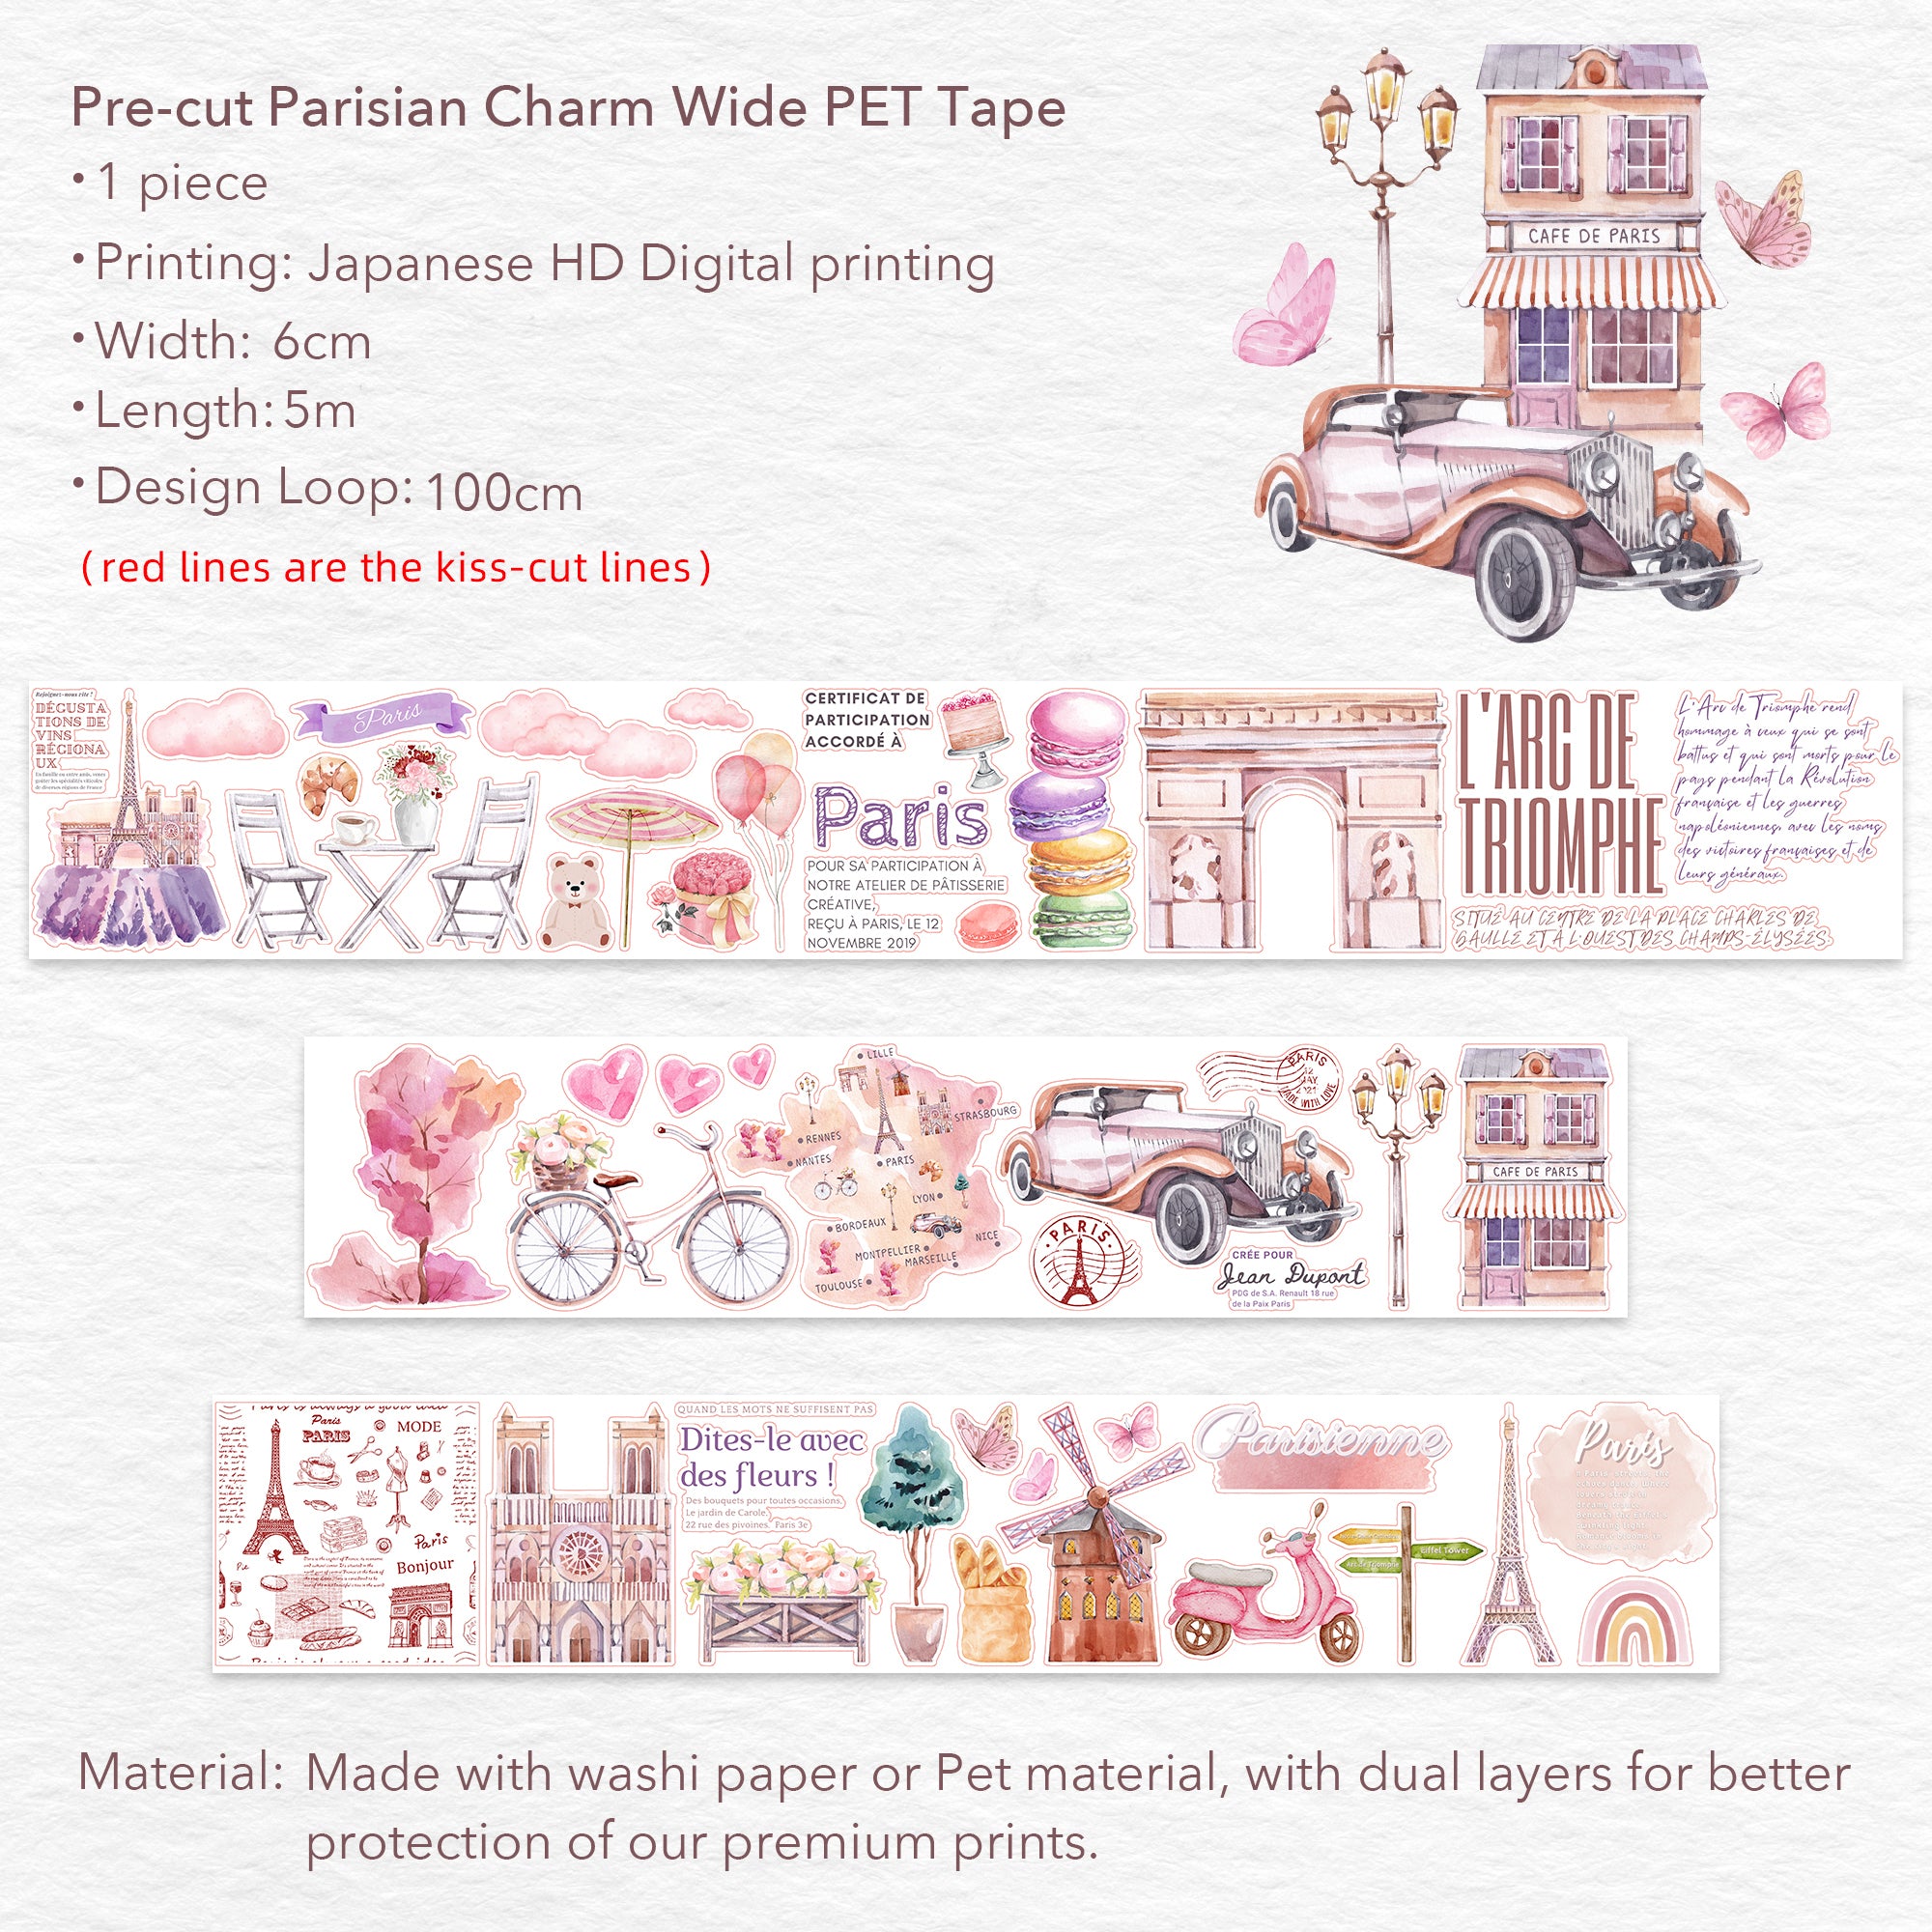 Pre-cut Parisian Charm Wide Washi / PET Tape